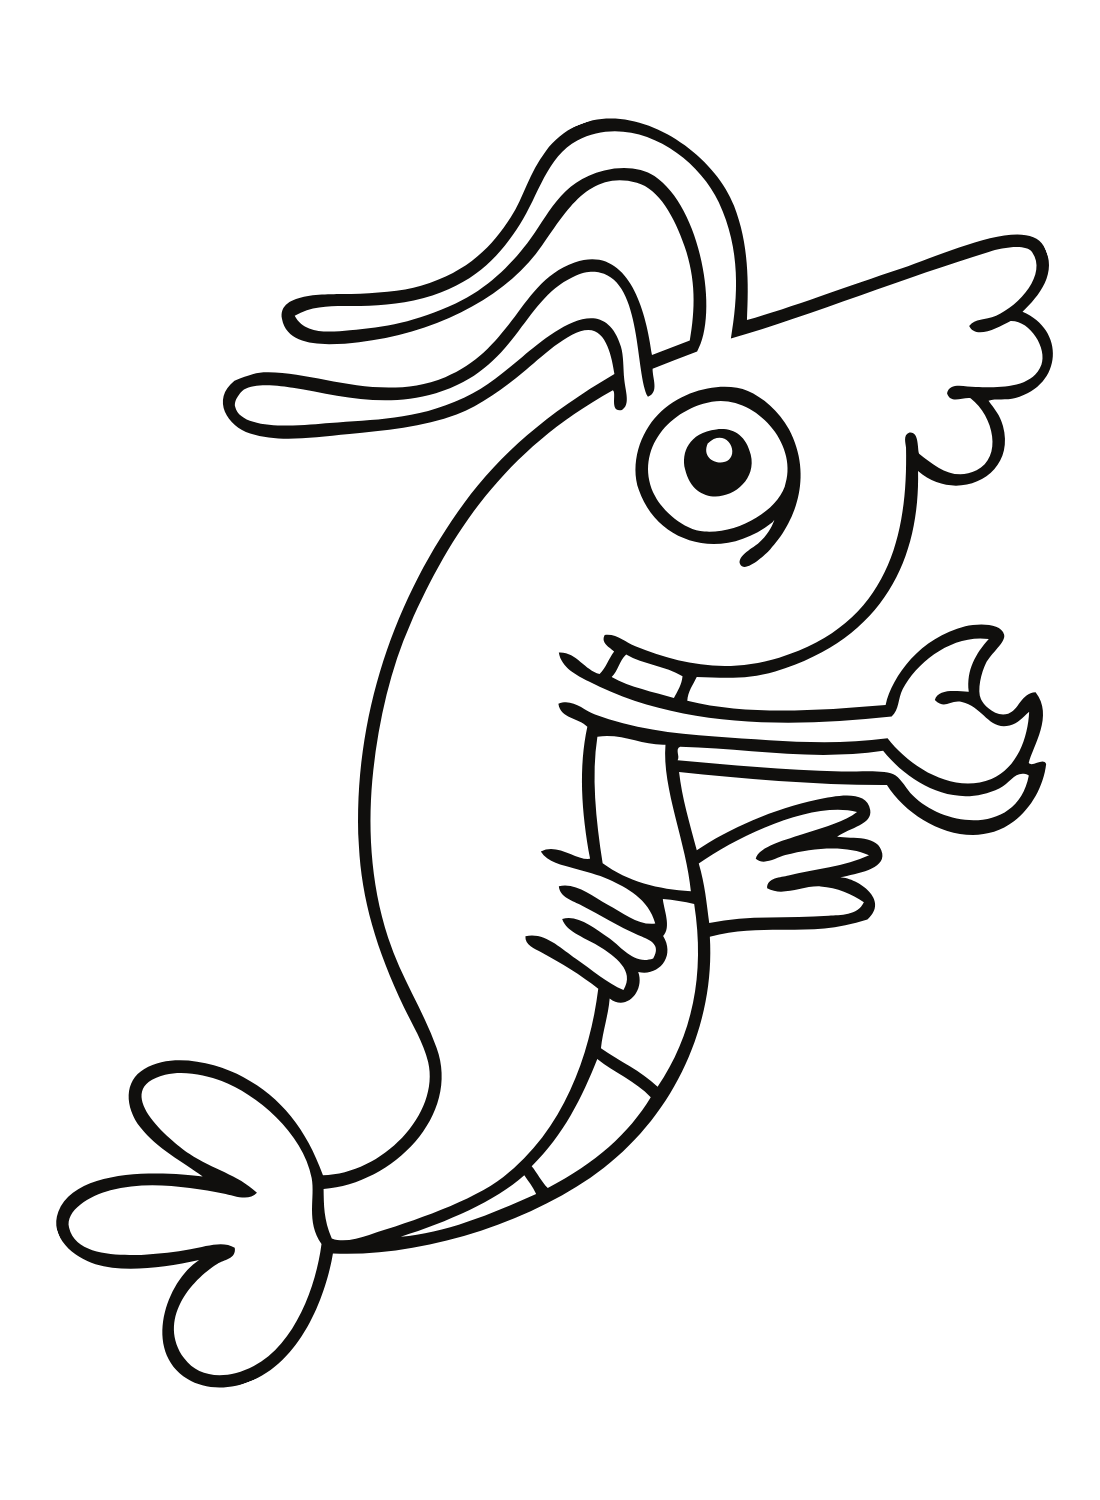 Cartoon Crawfish Coloring Page